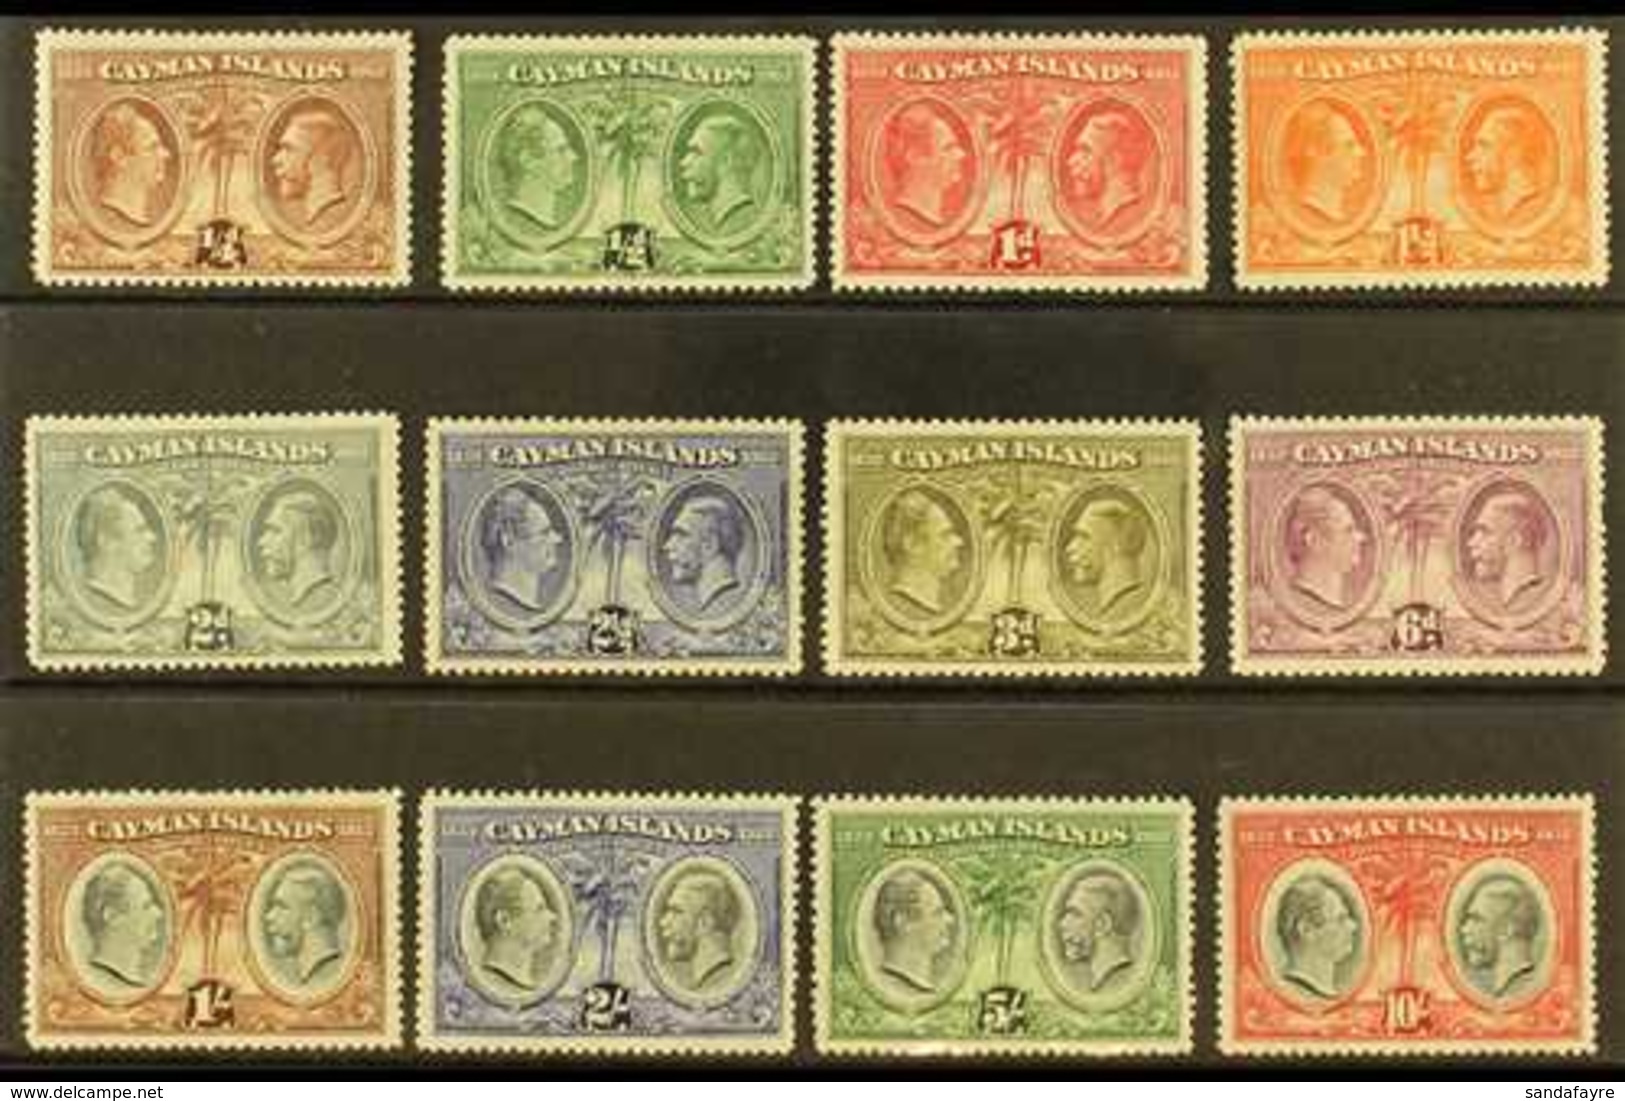 1932 Centenary Of The Justices & Vestry Set, SG 84/95, Fine Mint (12 Stamps) For More Images, Please Visit Http://www.sa - Iles Caïmans